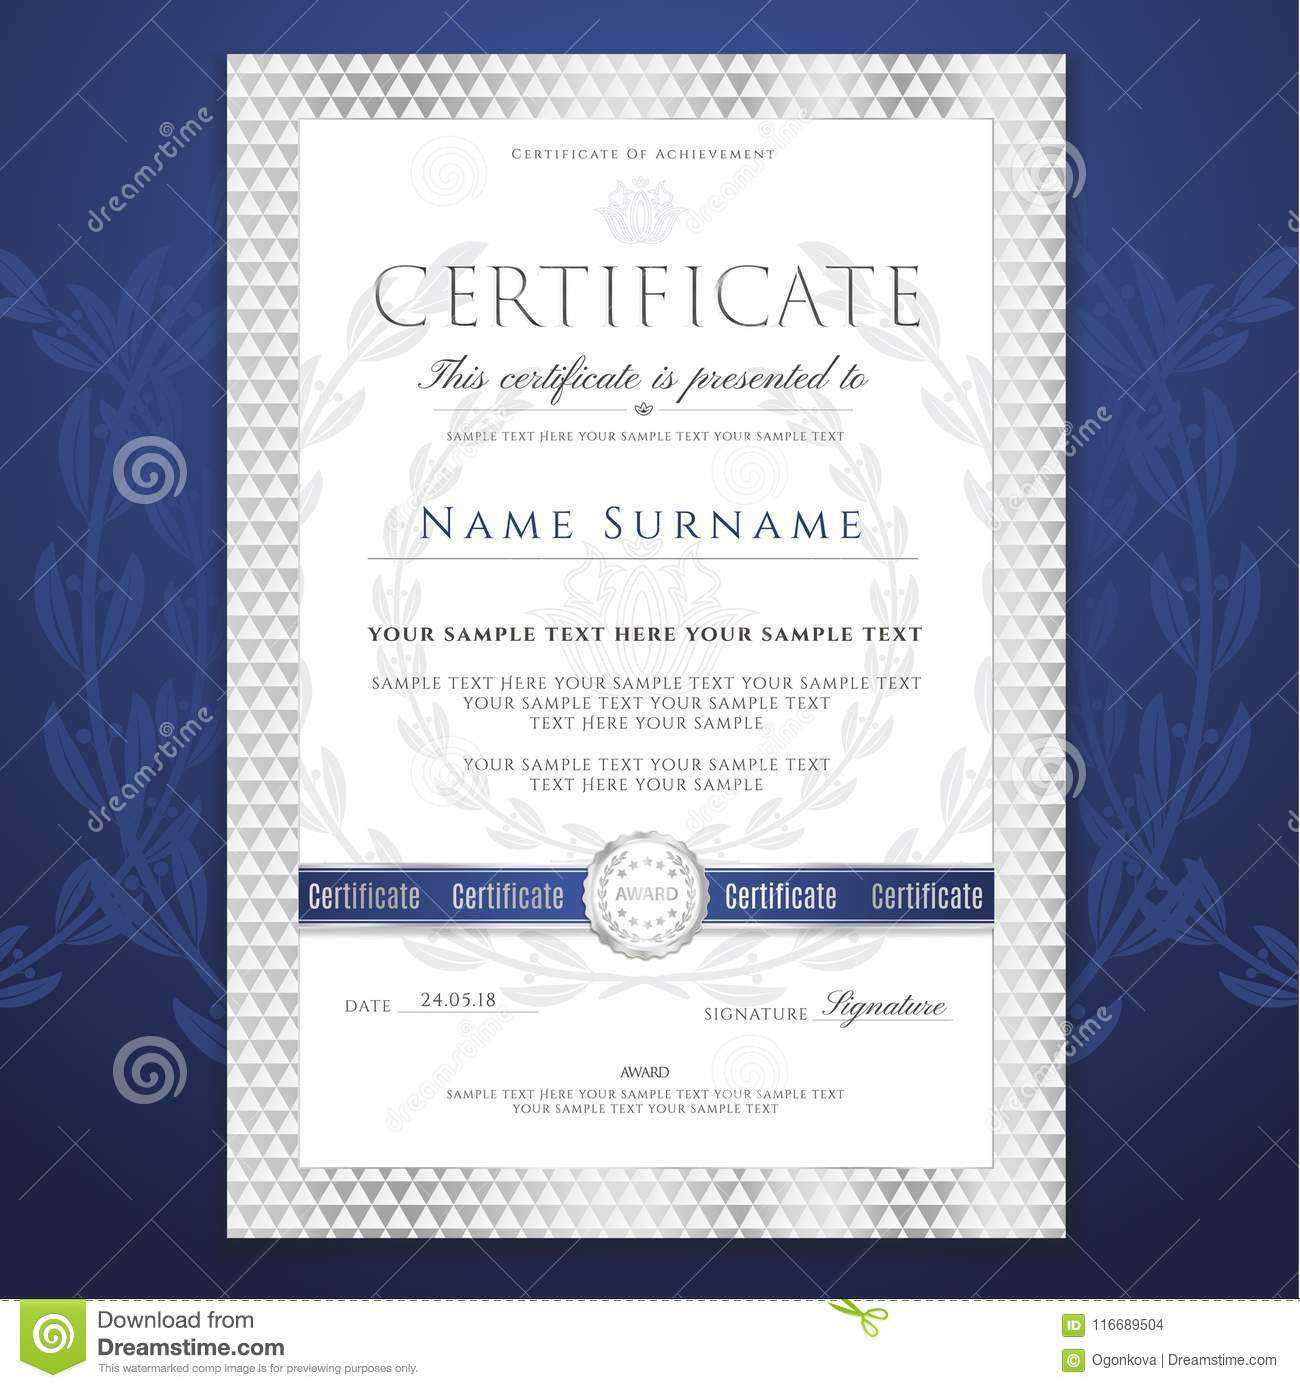 Certificate Template. Printable / Editable Design For Regarding Blank Certificate Of Achievement Template